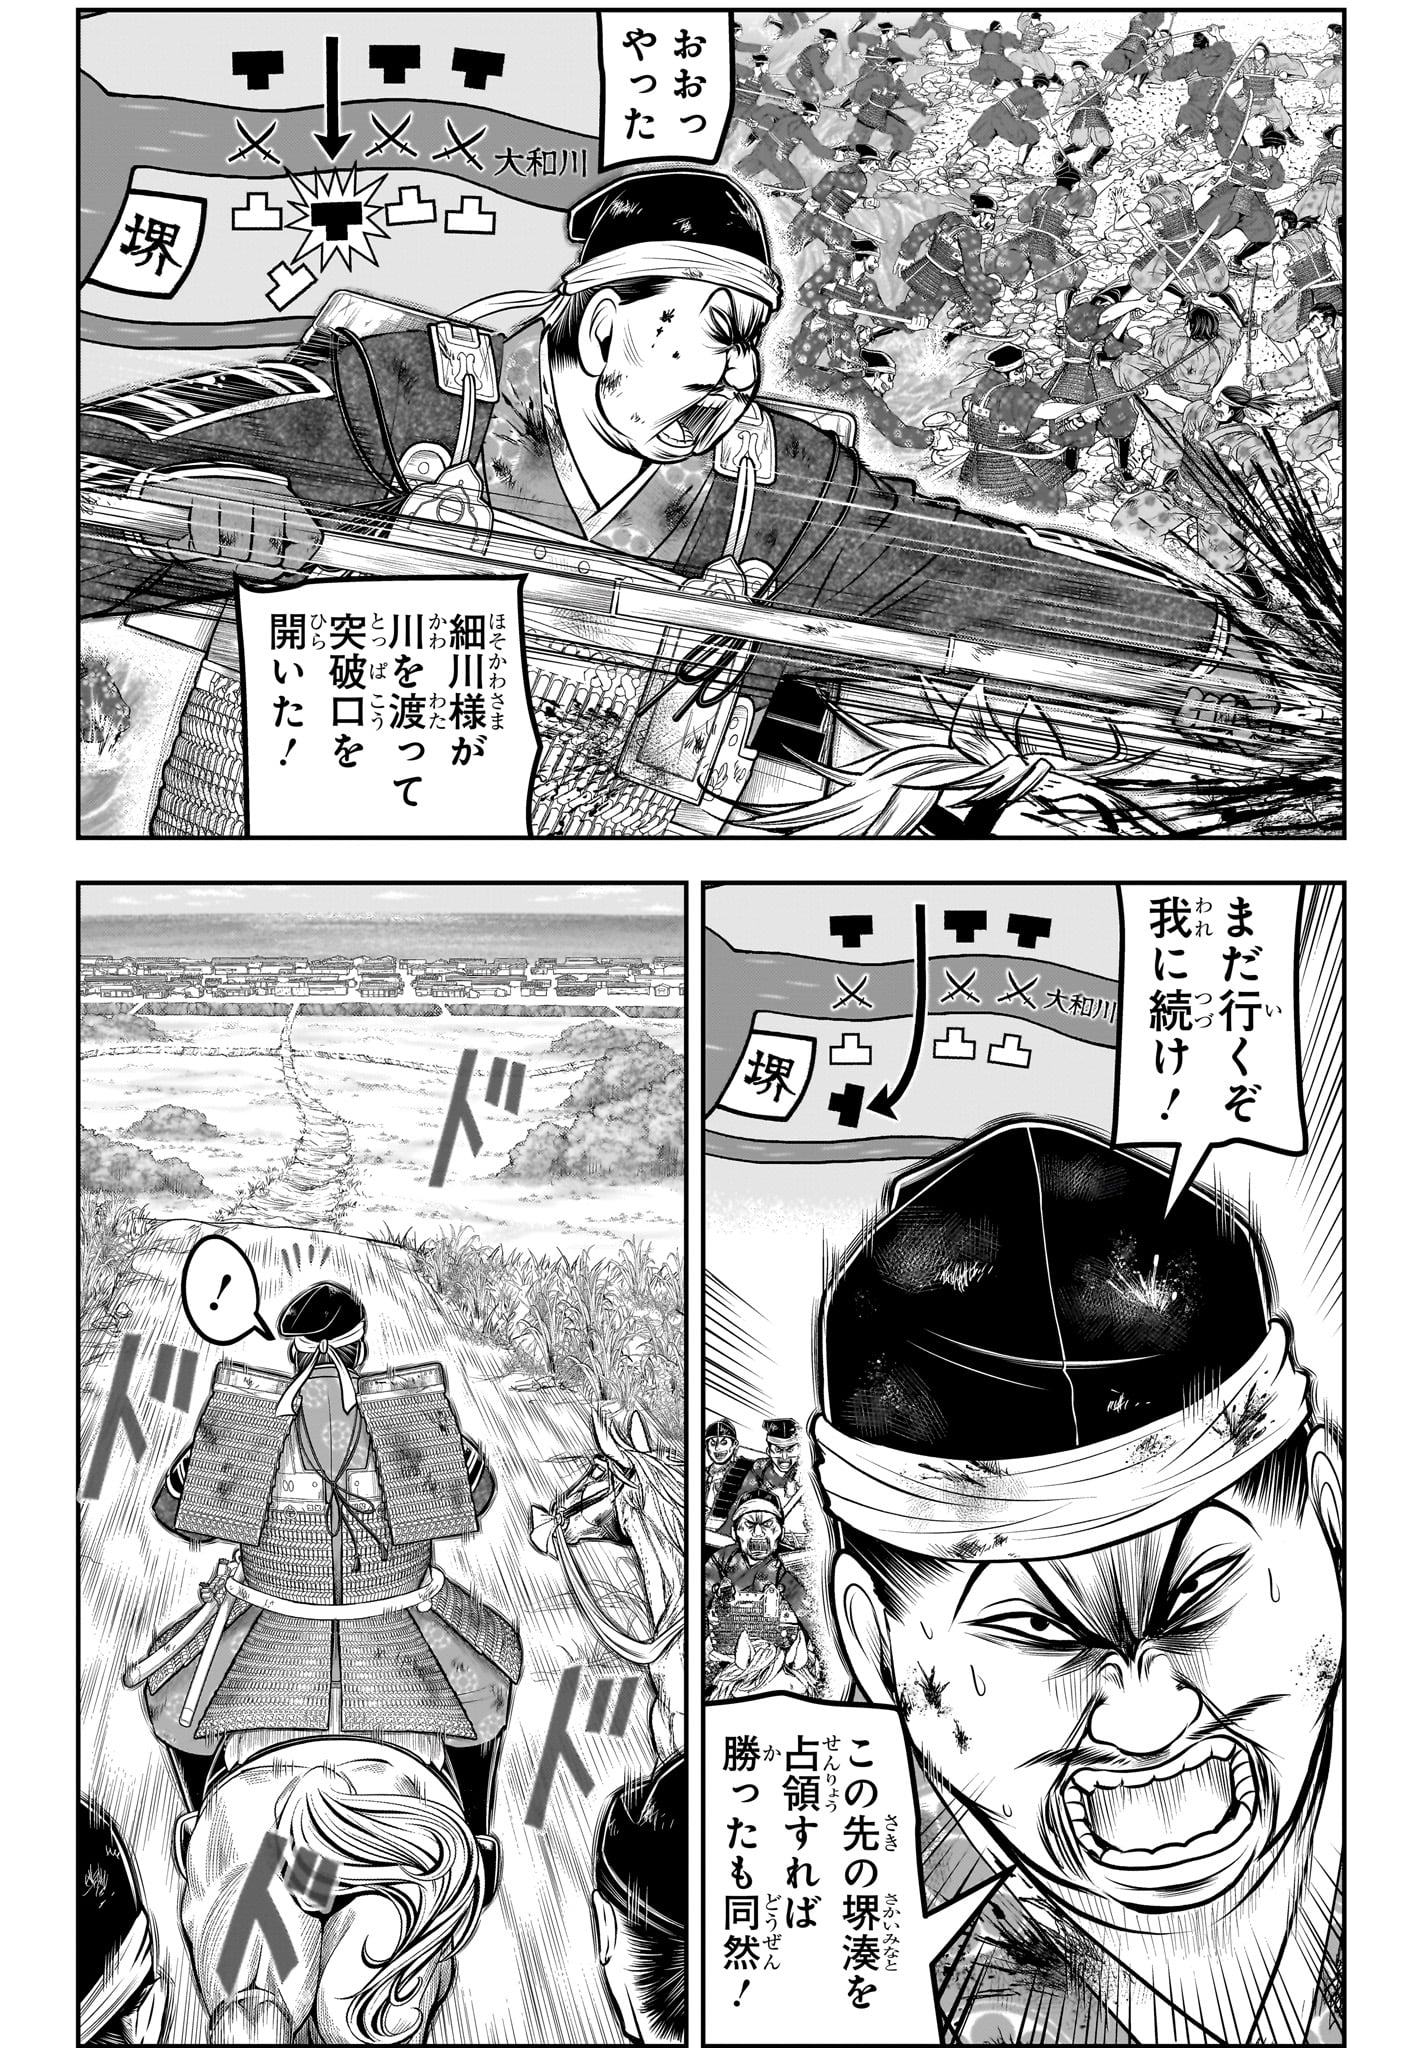 Nige Jouzu no Wakagimi - Chapter 158 - Page 4